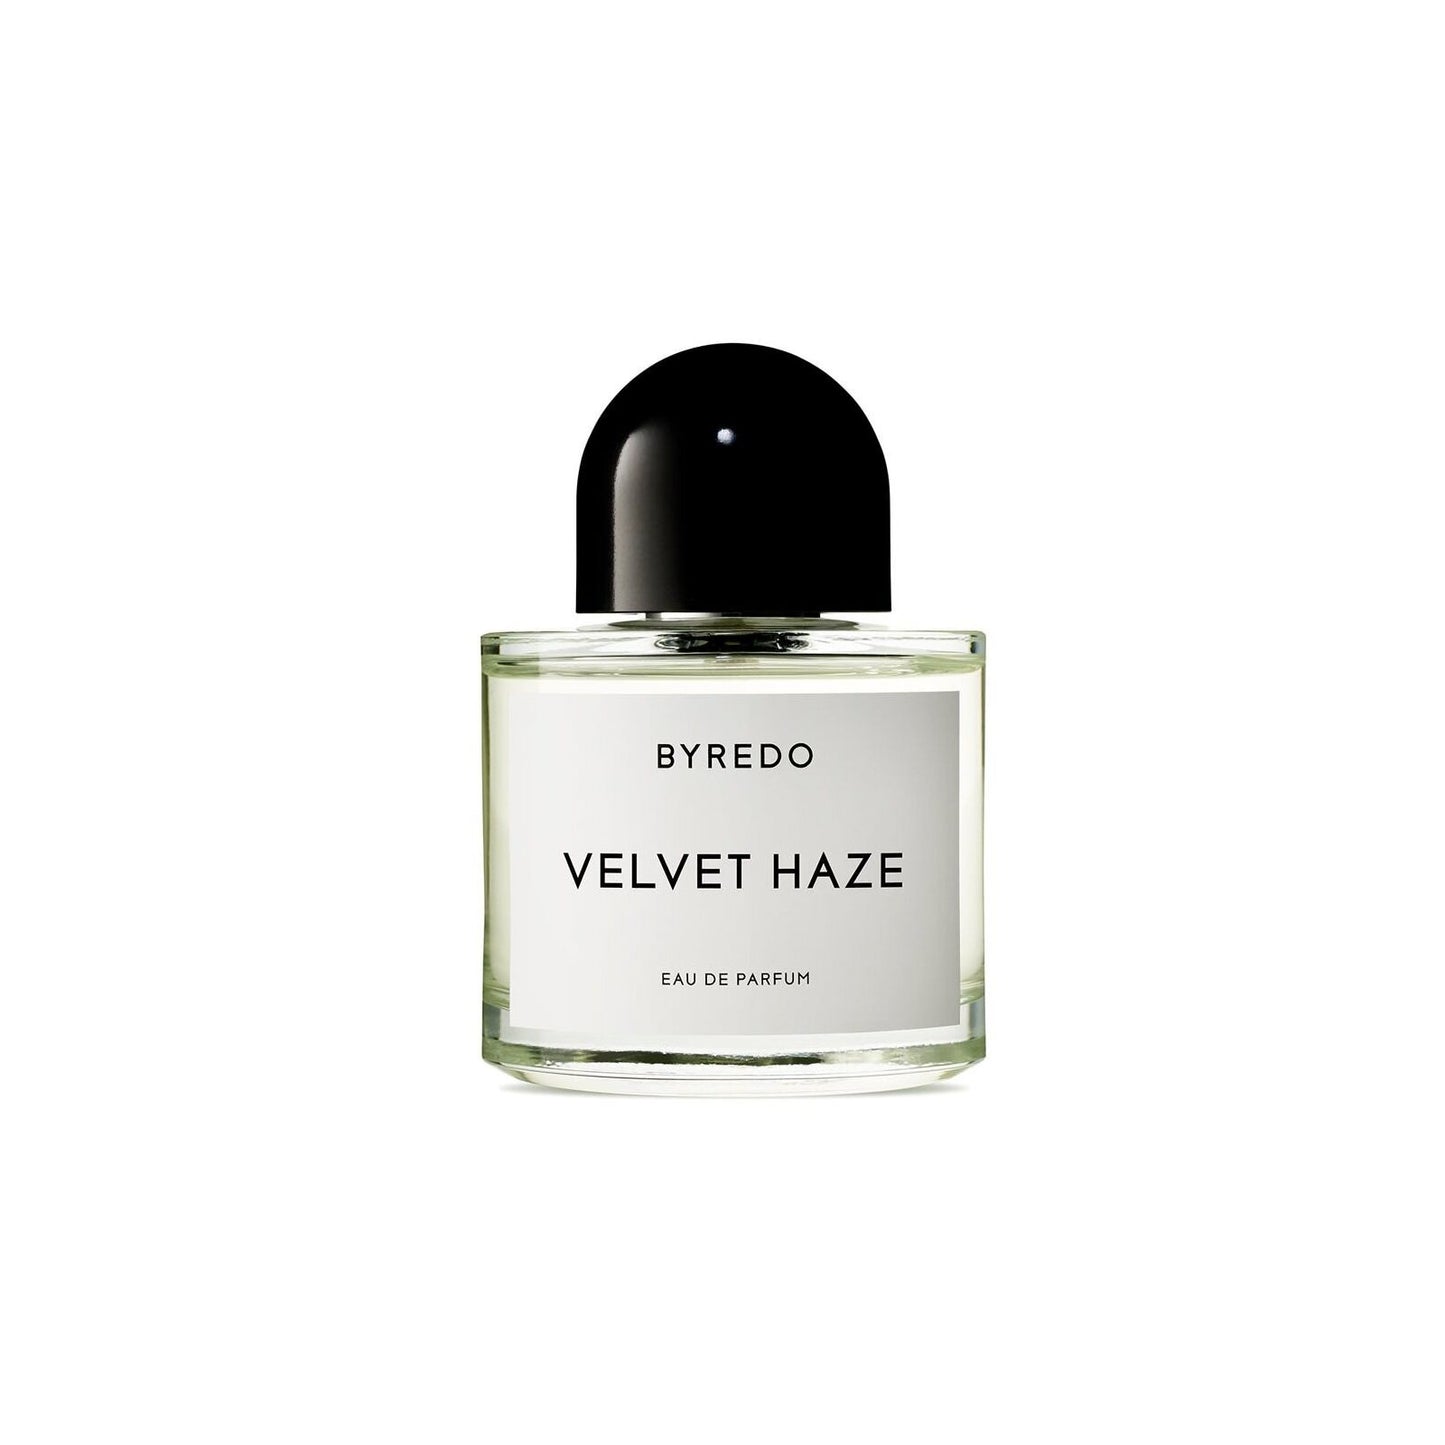 Byredo Velvet Haze Eau de Parfum